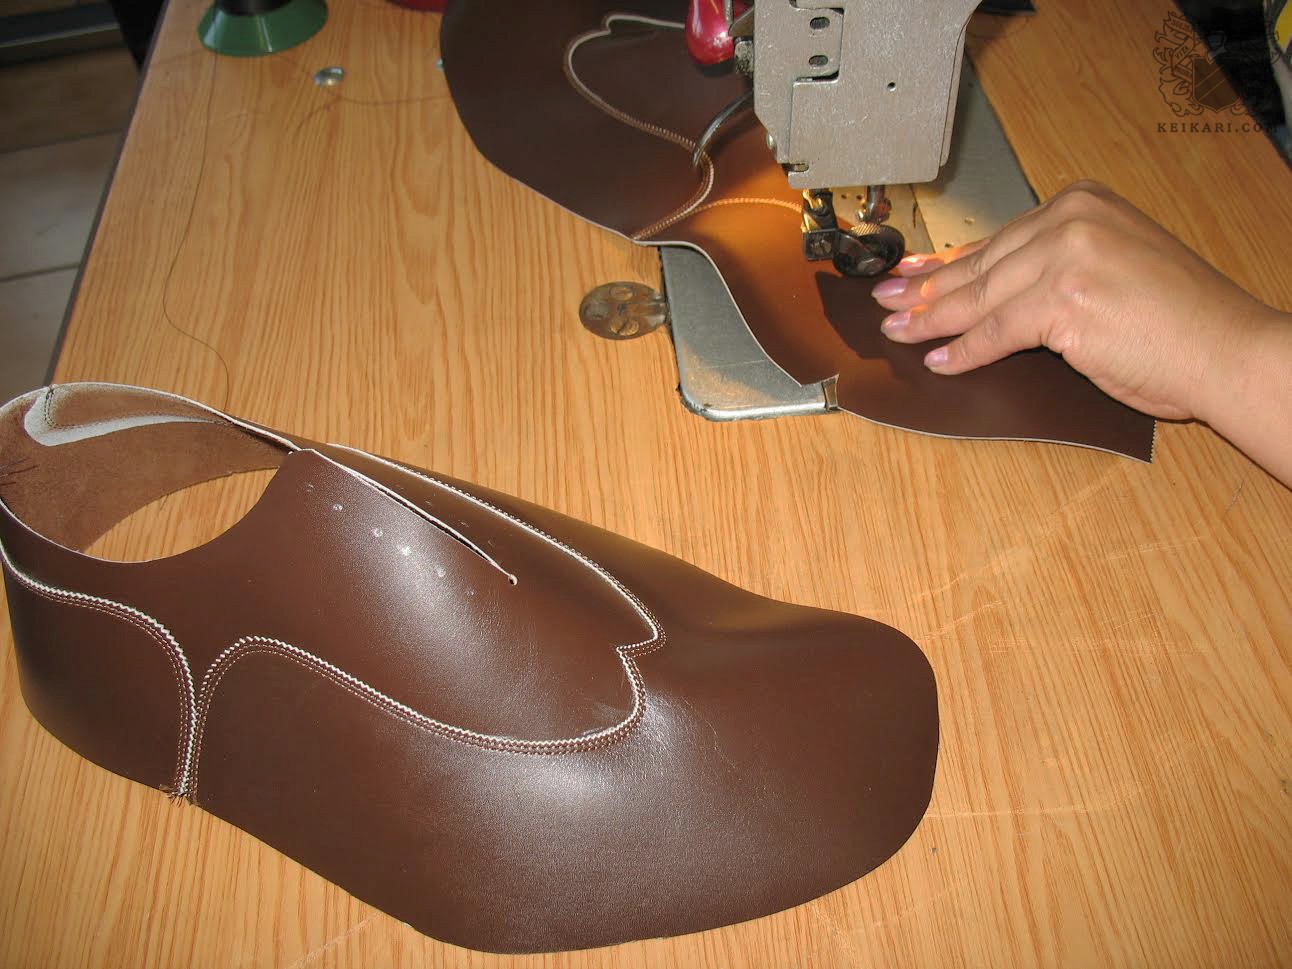 Made_to_measure_shoes_from_Buday_at_Keikari_dot_com05